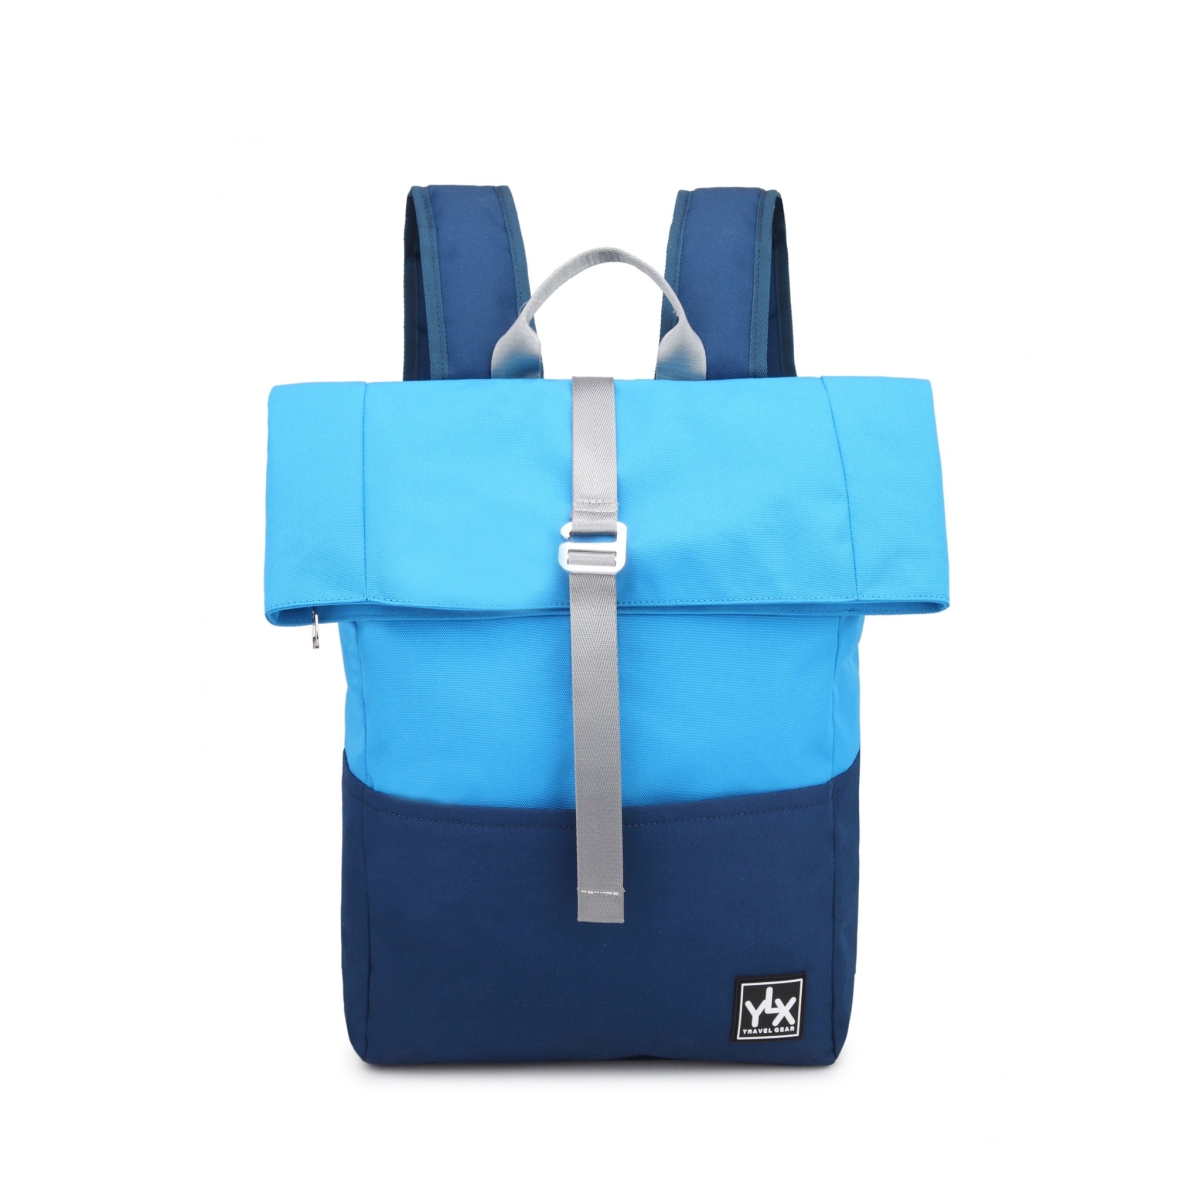 YLX Original Backpack | Light Blue & Navy Blue